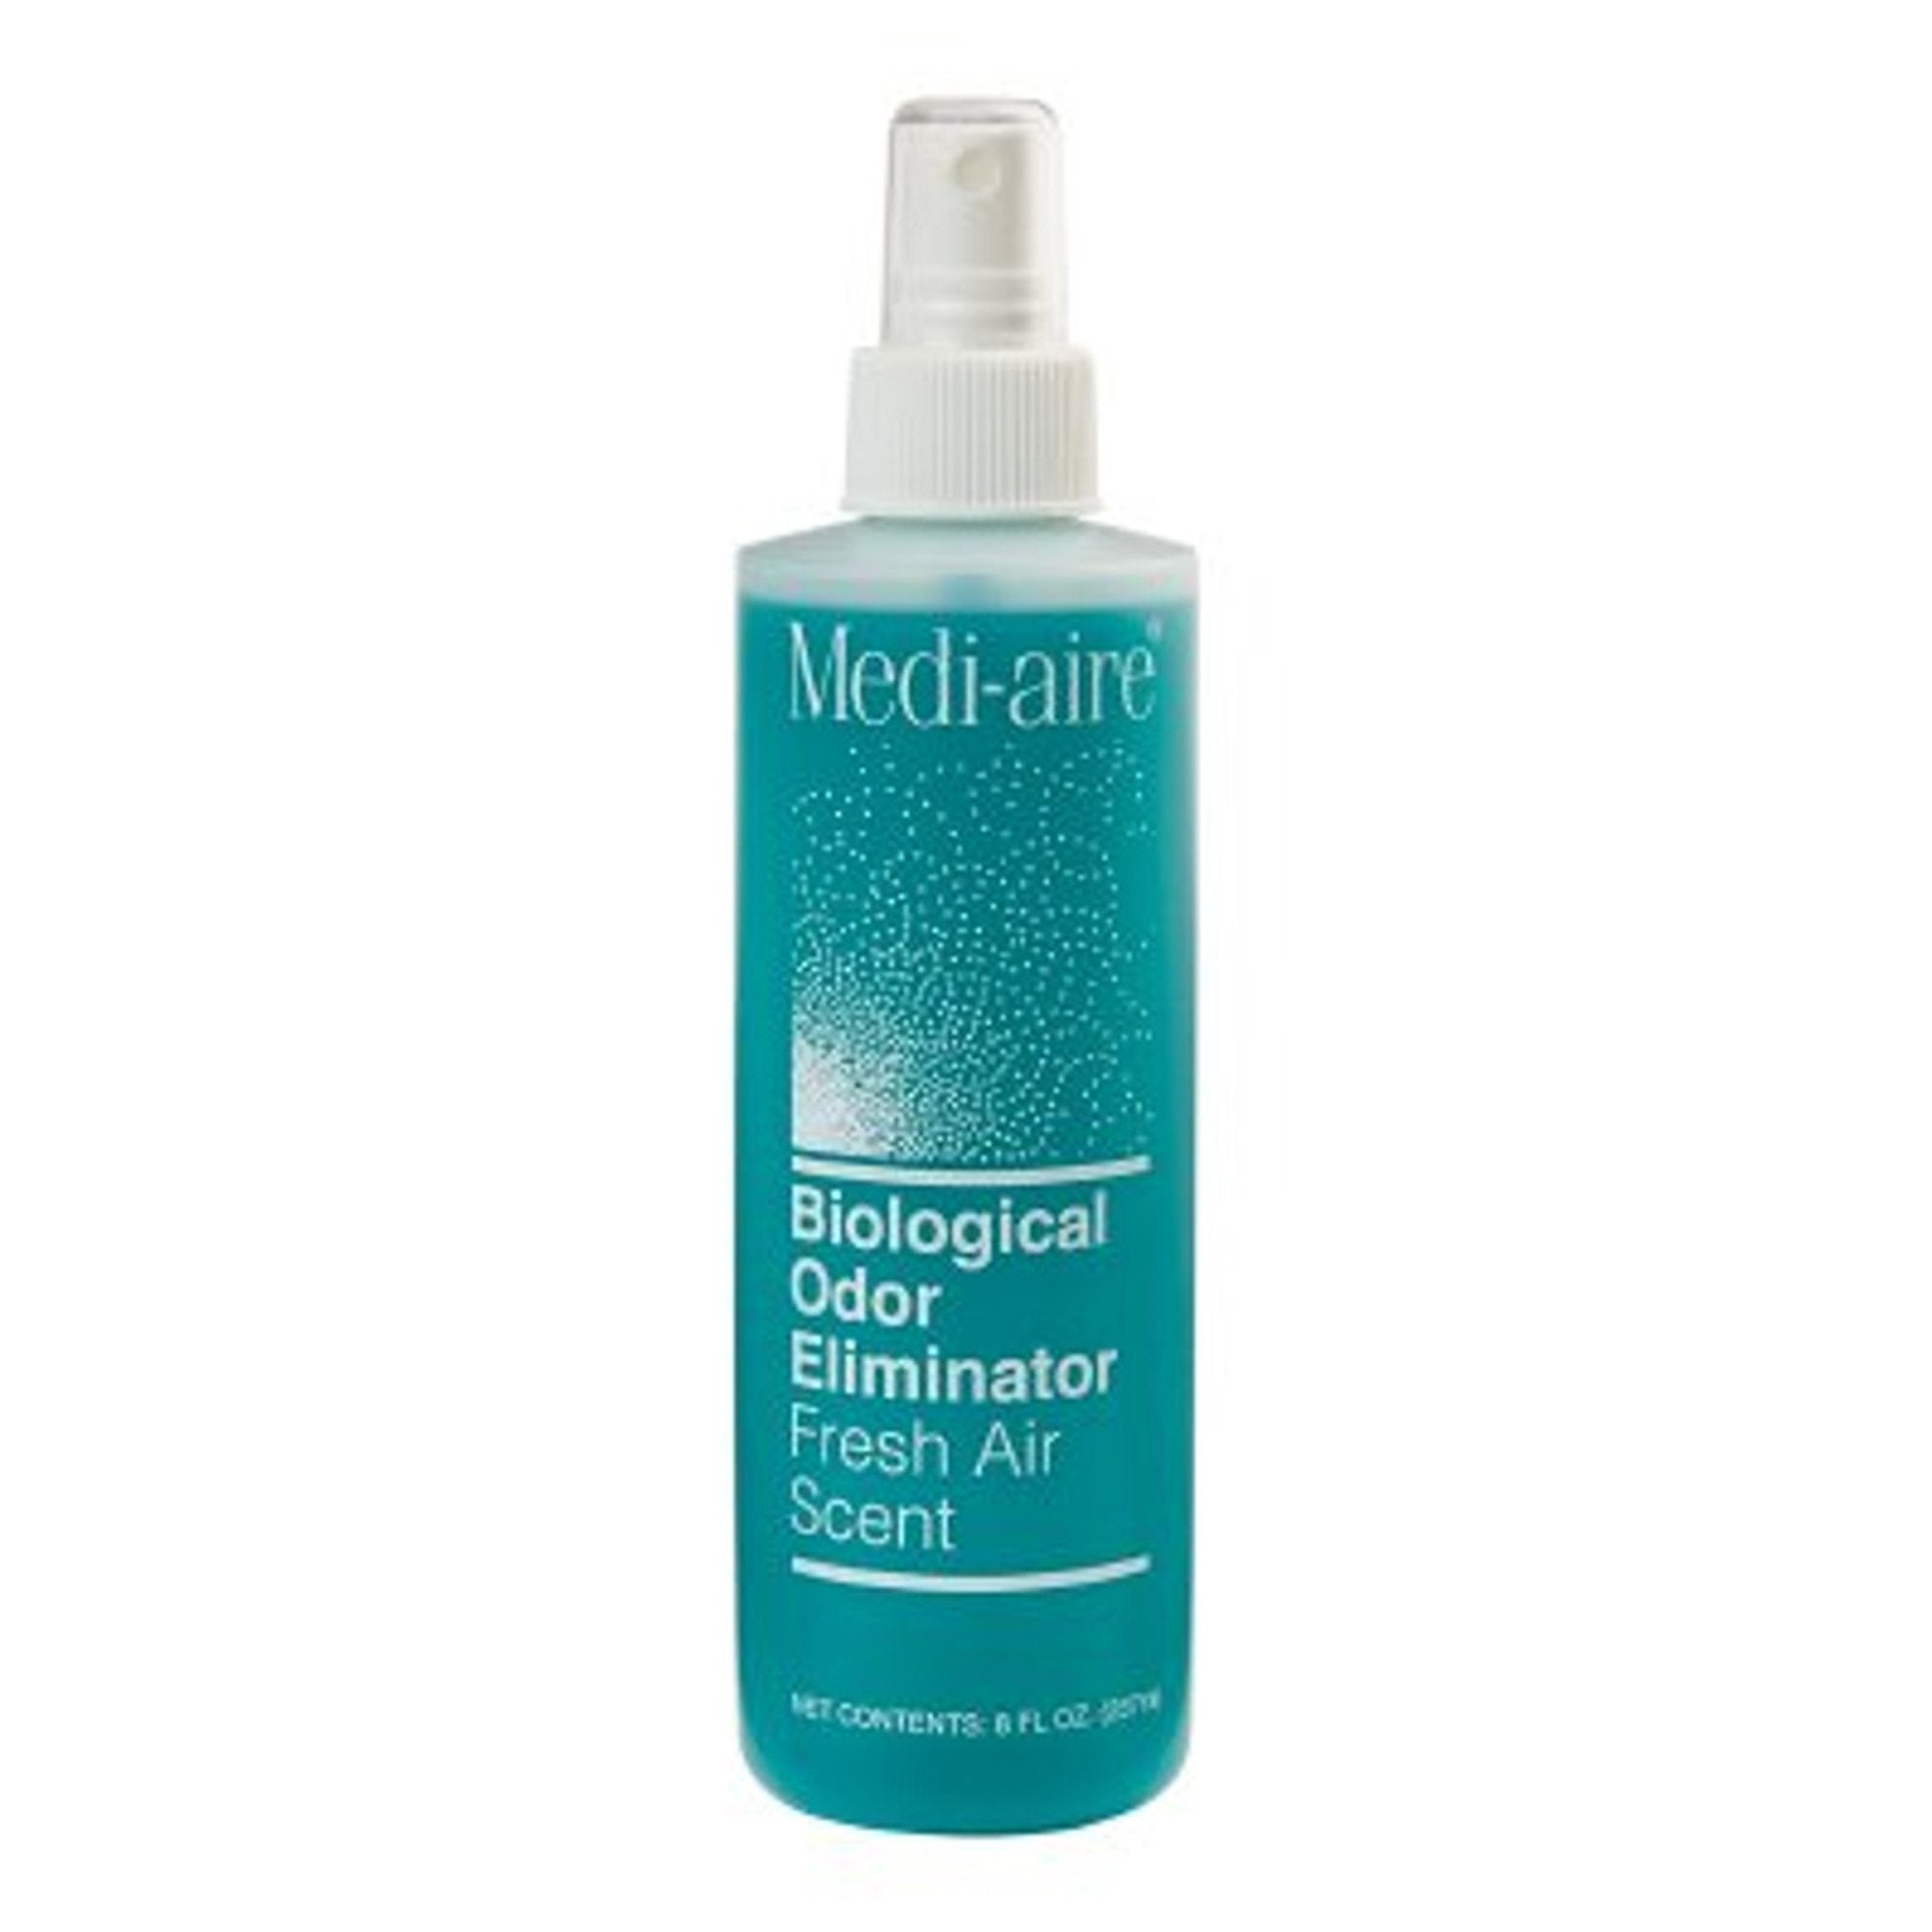 Deodorizer Refill Medi-aire Biological Odor Eliminator Liquid 8 oz. Bottle Fresh Air Scent